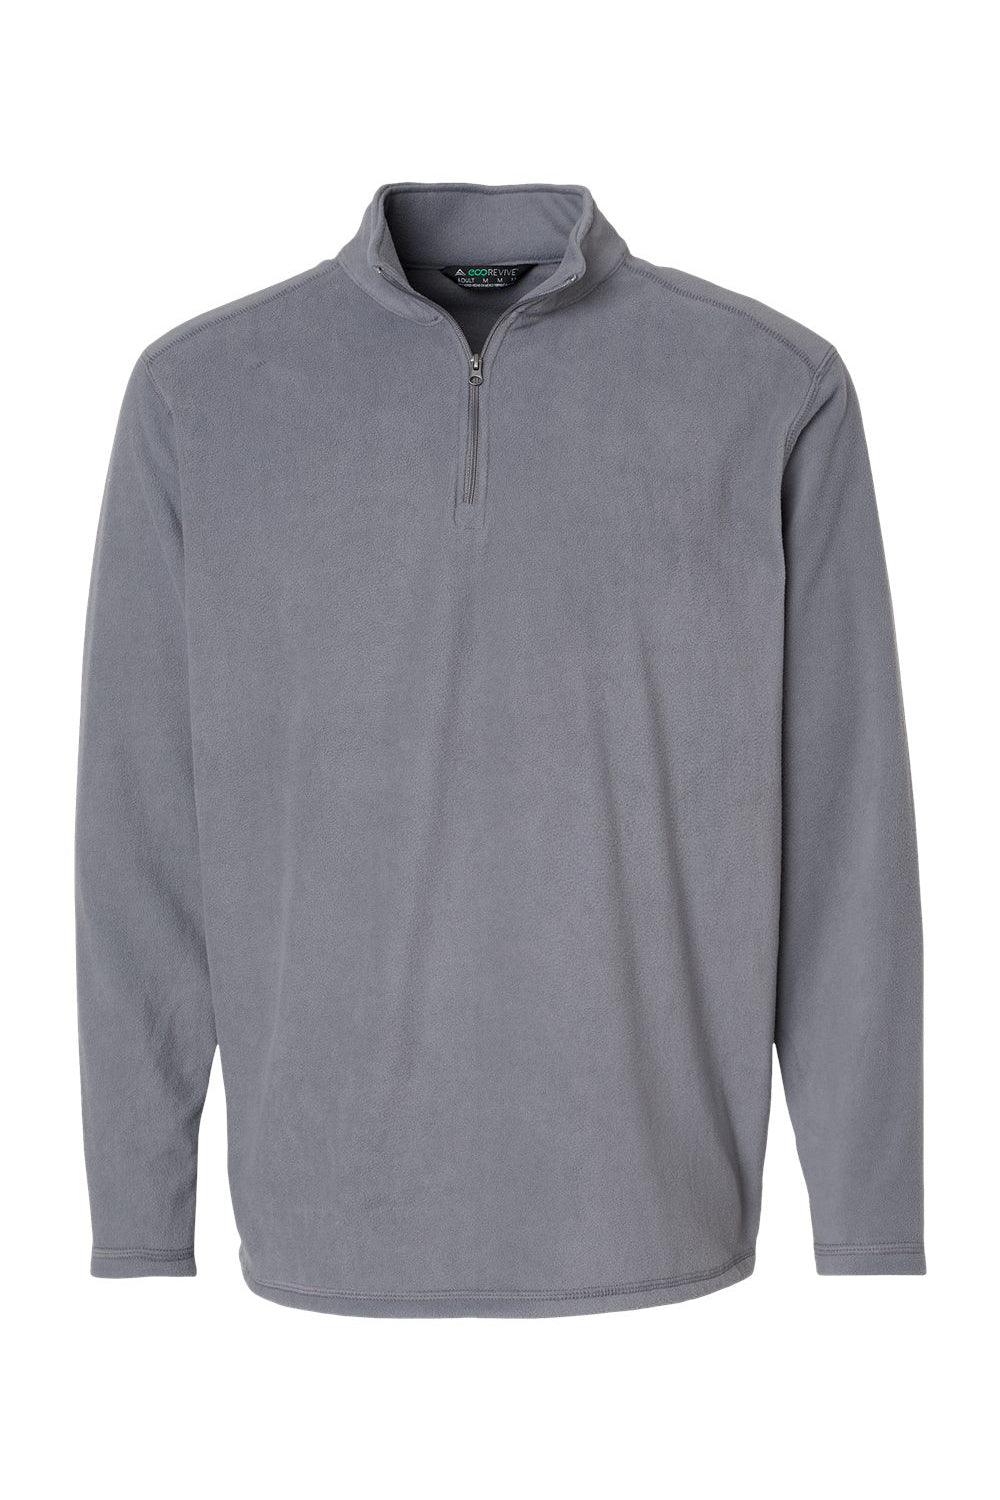 Augusta Sportswear 6863 Mens Eco Revive Micro Lite Fleece 1/4 Zip Sweatshirt Graphite Grey Flat Front